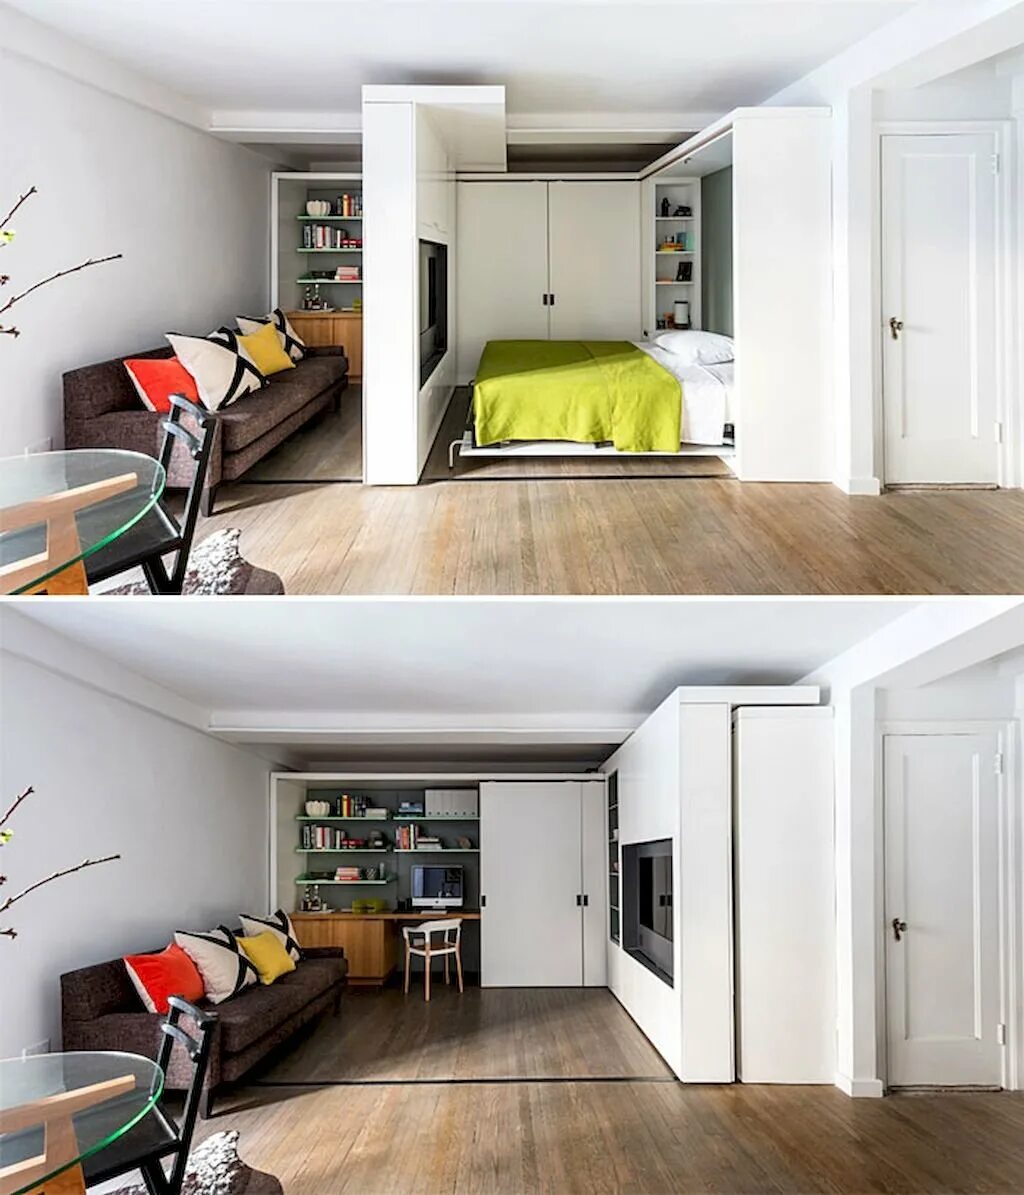 Хочу половины квартиры. Идеи для маленькой квартиры. Интересные решения для маленькой квартиры. Функциональный интерьер. Дизайнерские решения для однокомнатной квартиры.